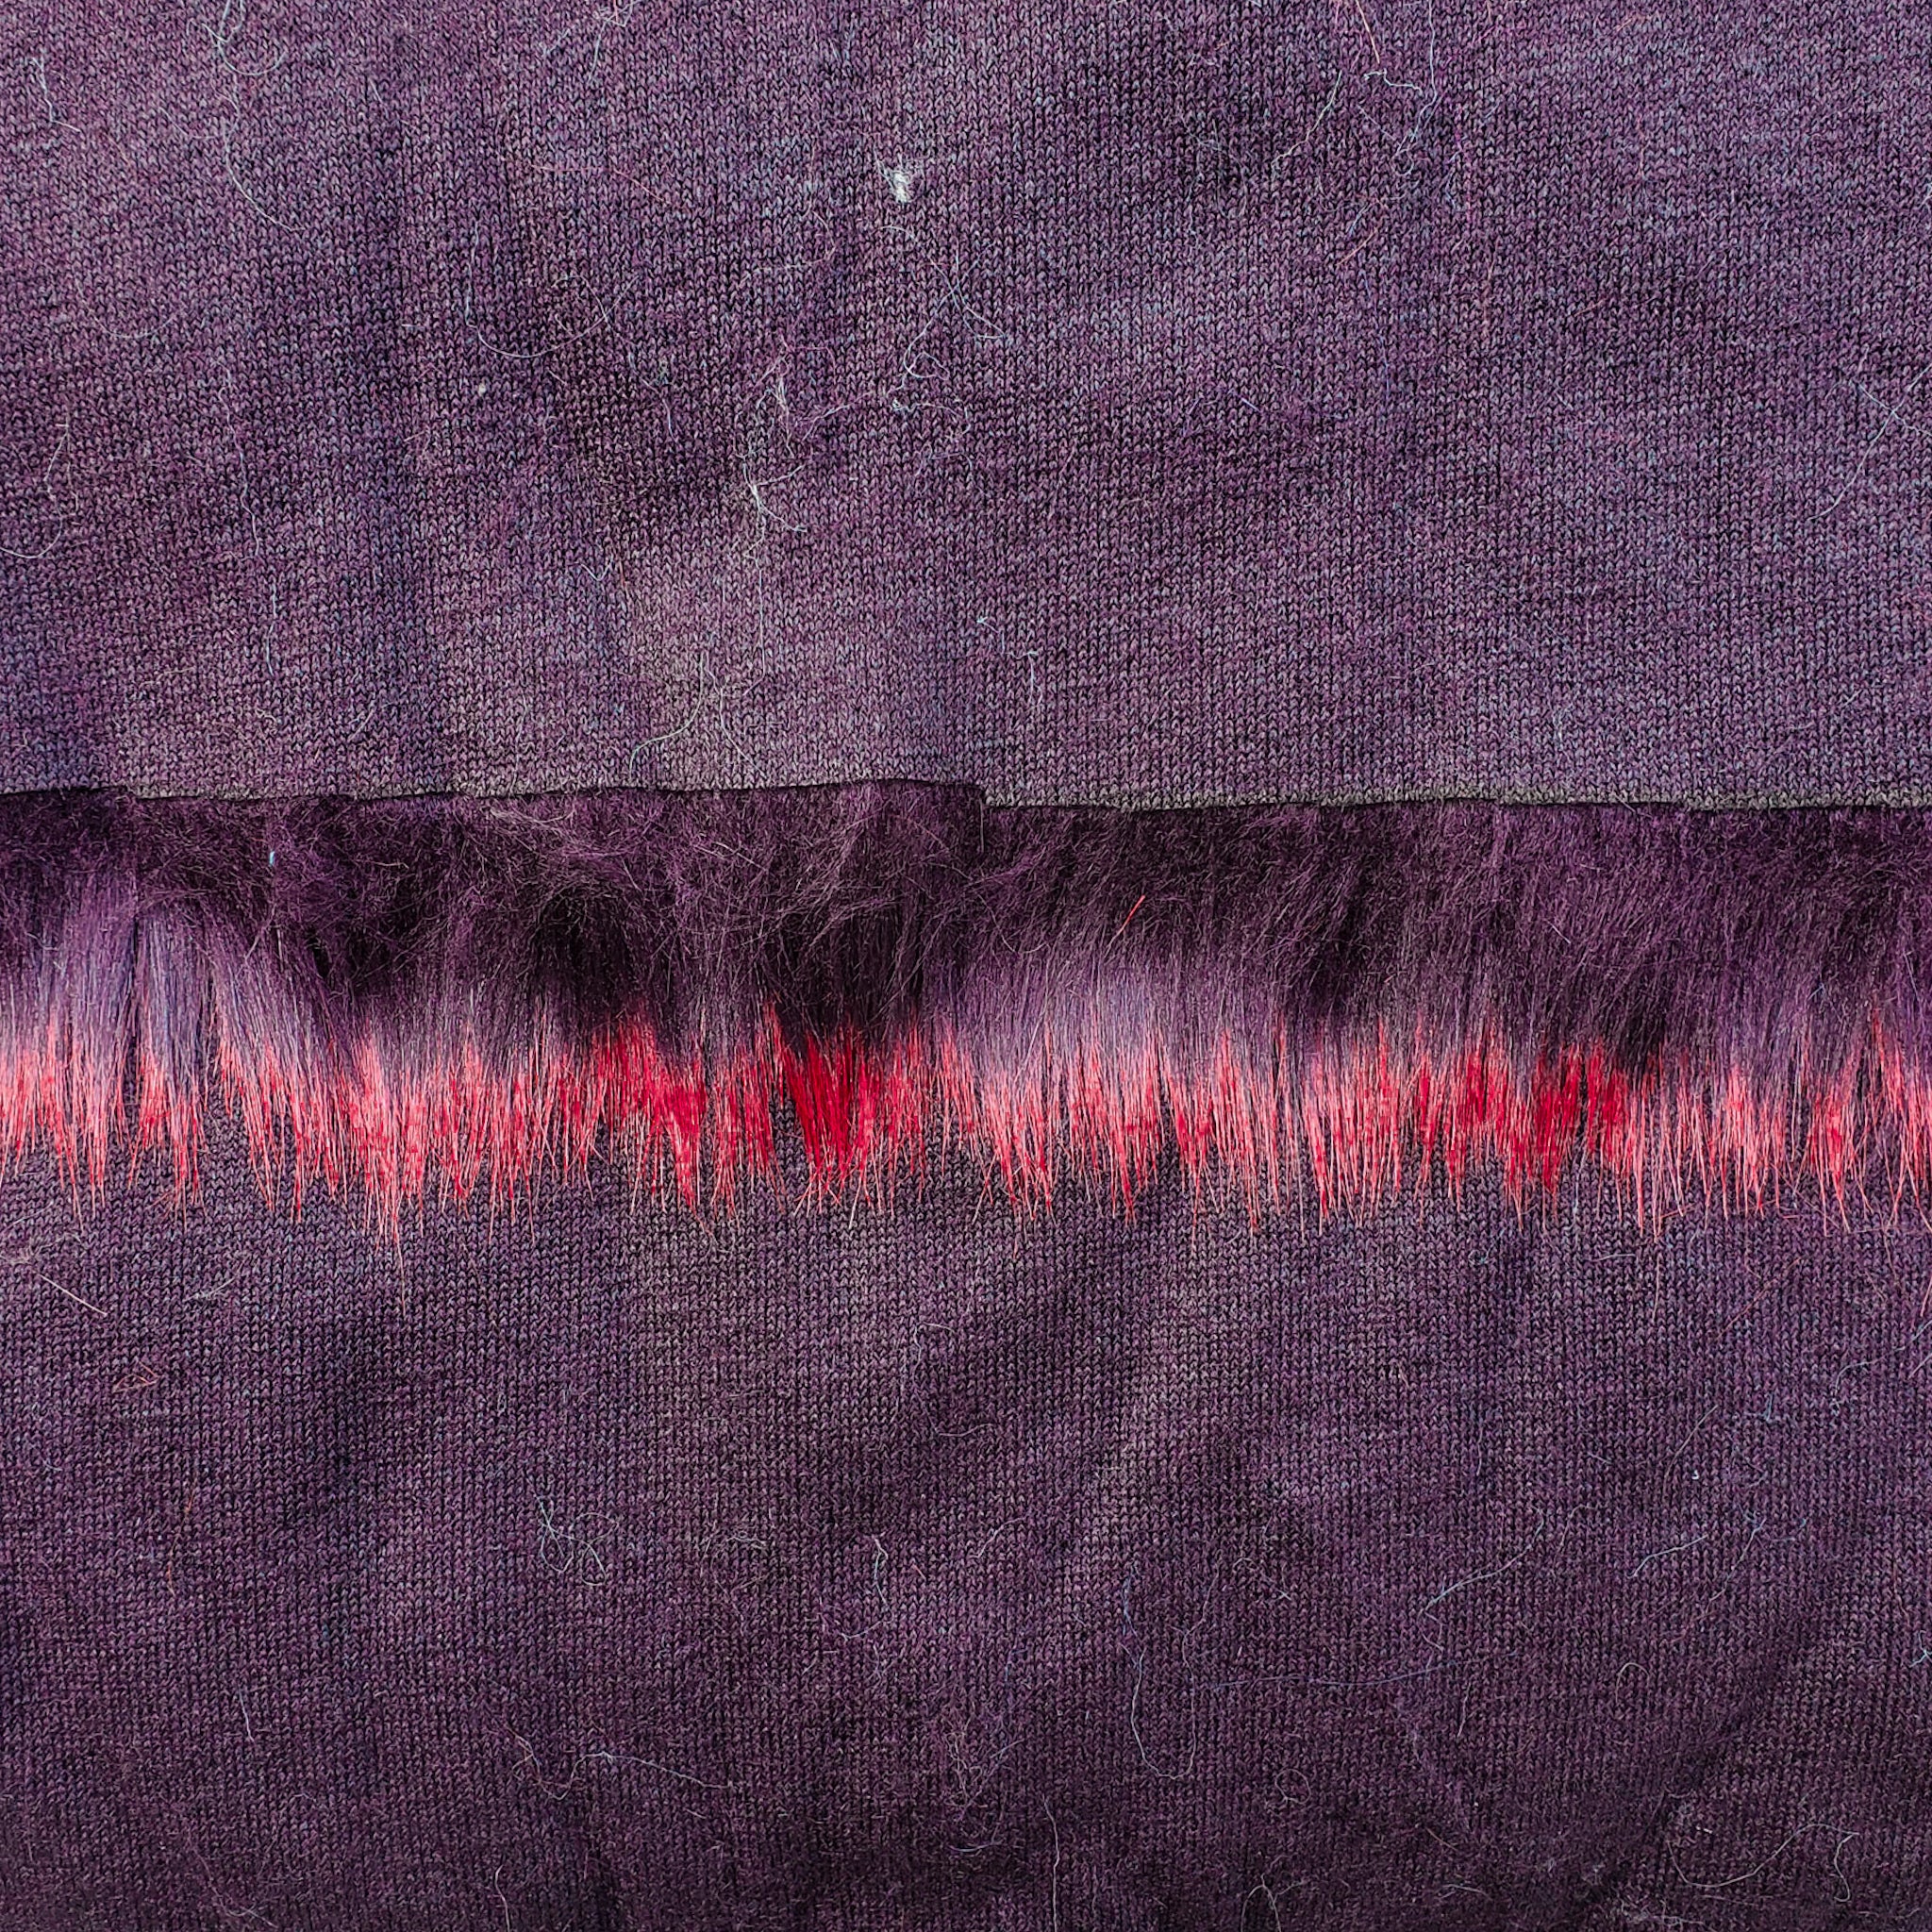 Roxy Fake Fur Faux Fur Fabric by the Metre / Yard